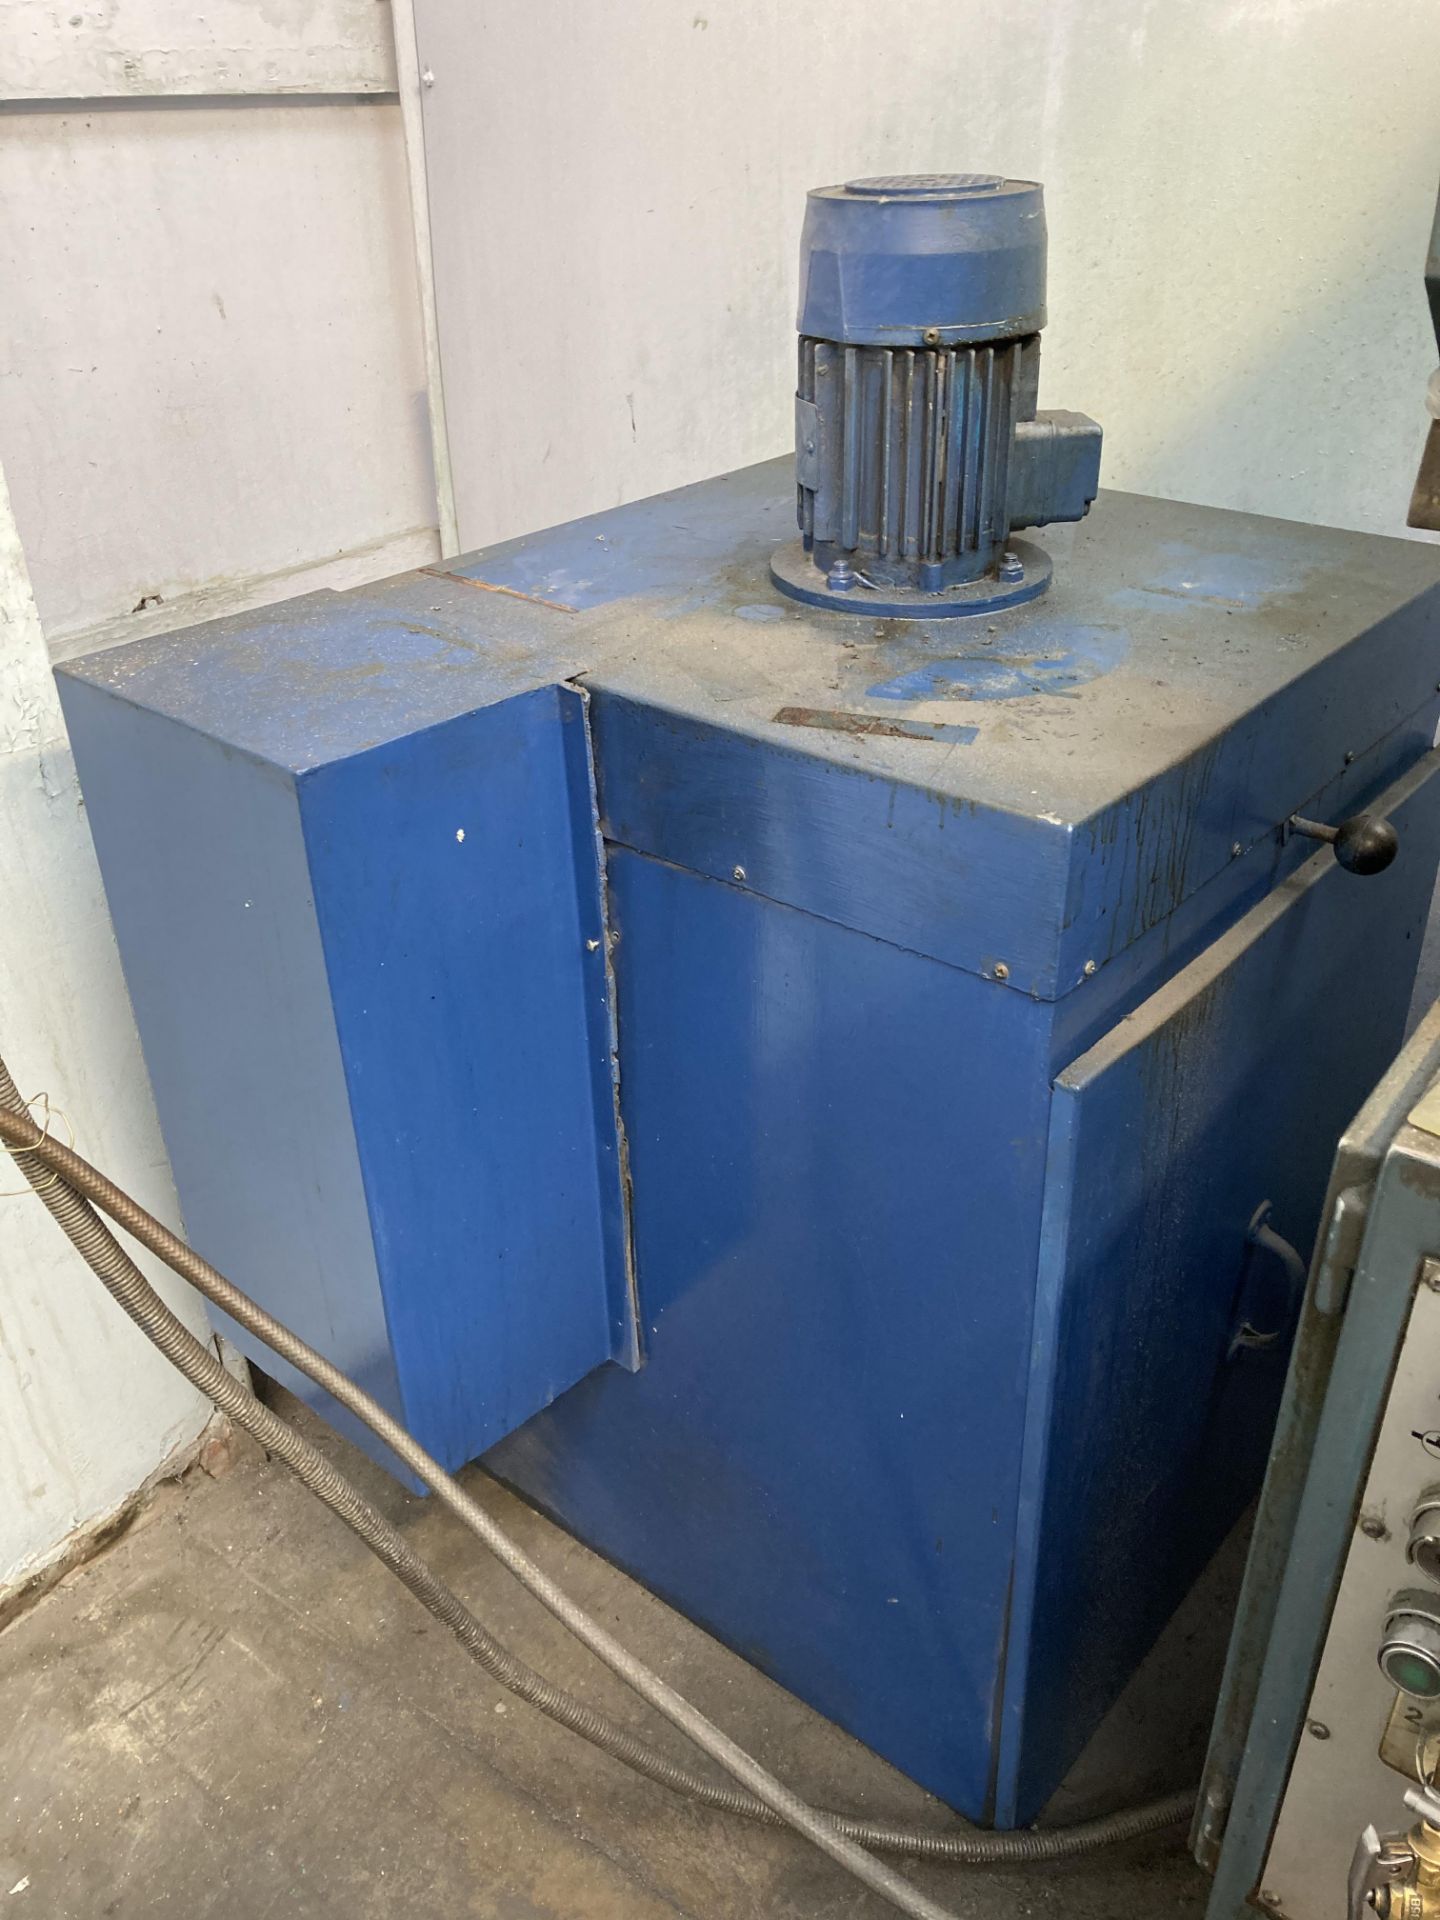 Jones & Shipman 540L horizontal surface grinding machine, Serial No. B098289, table size 26" x 6" - Image 6 of 9